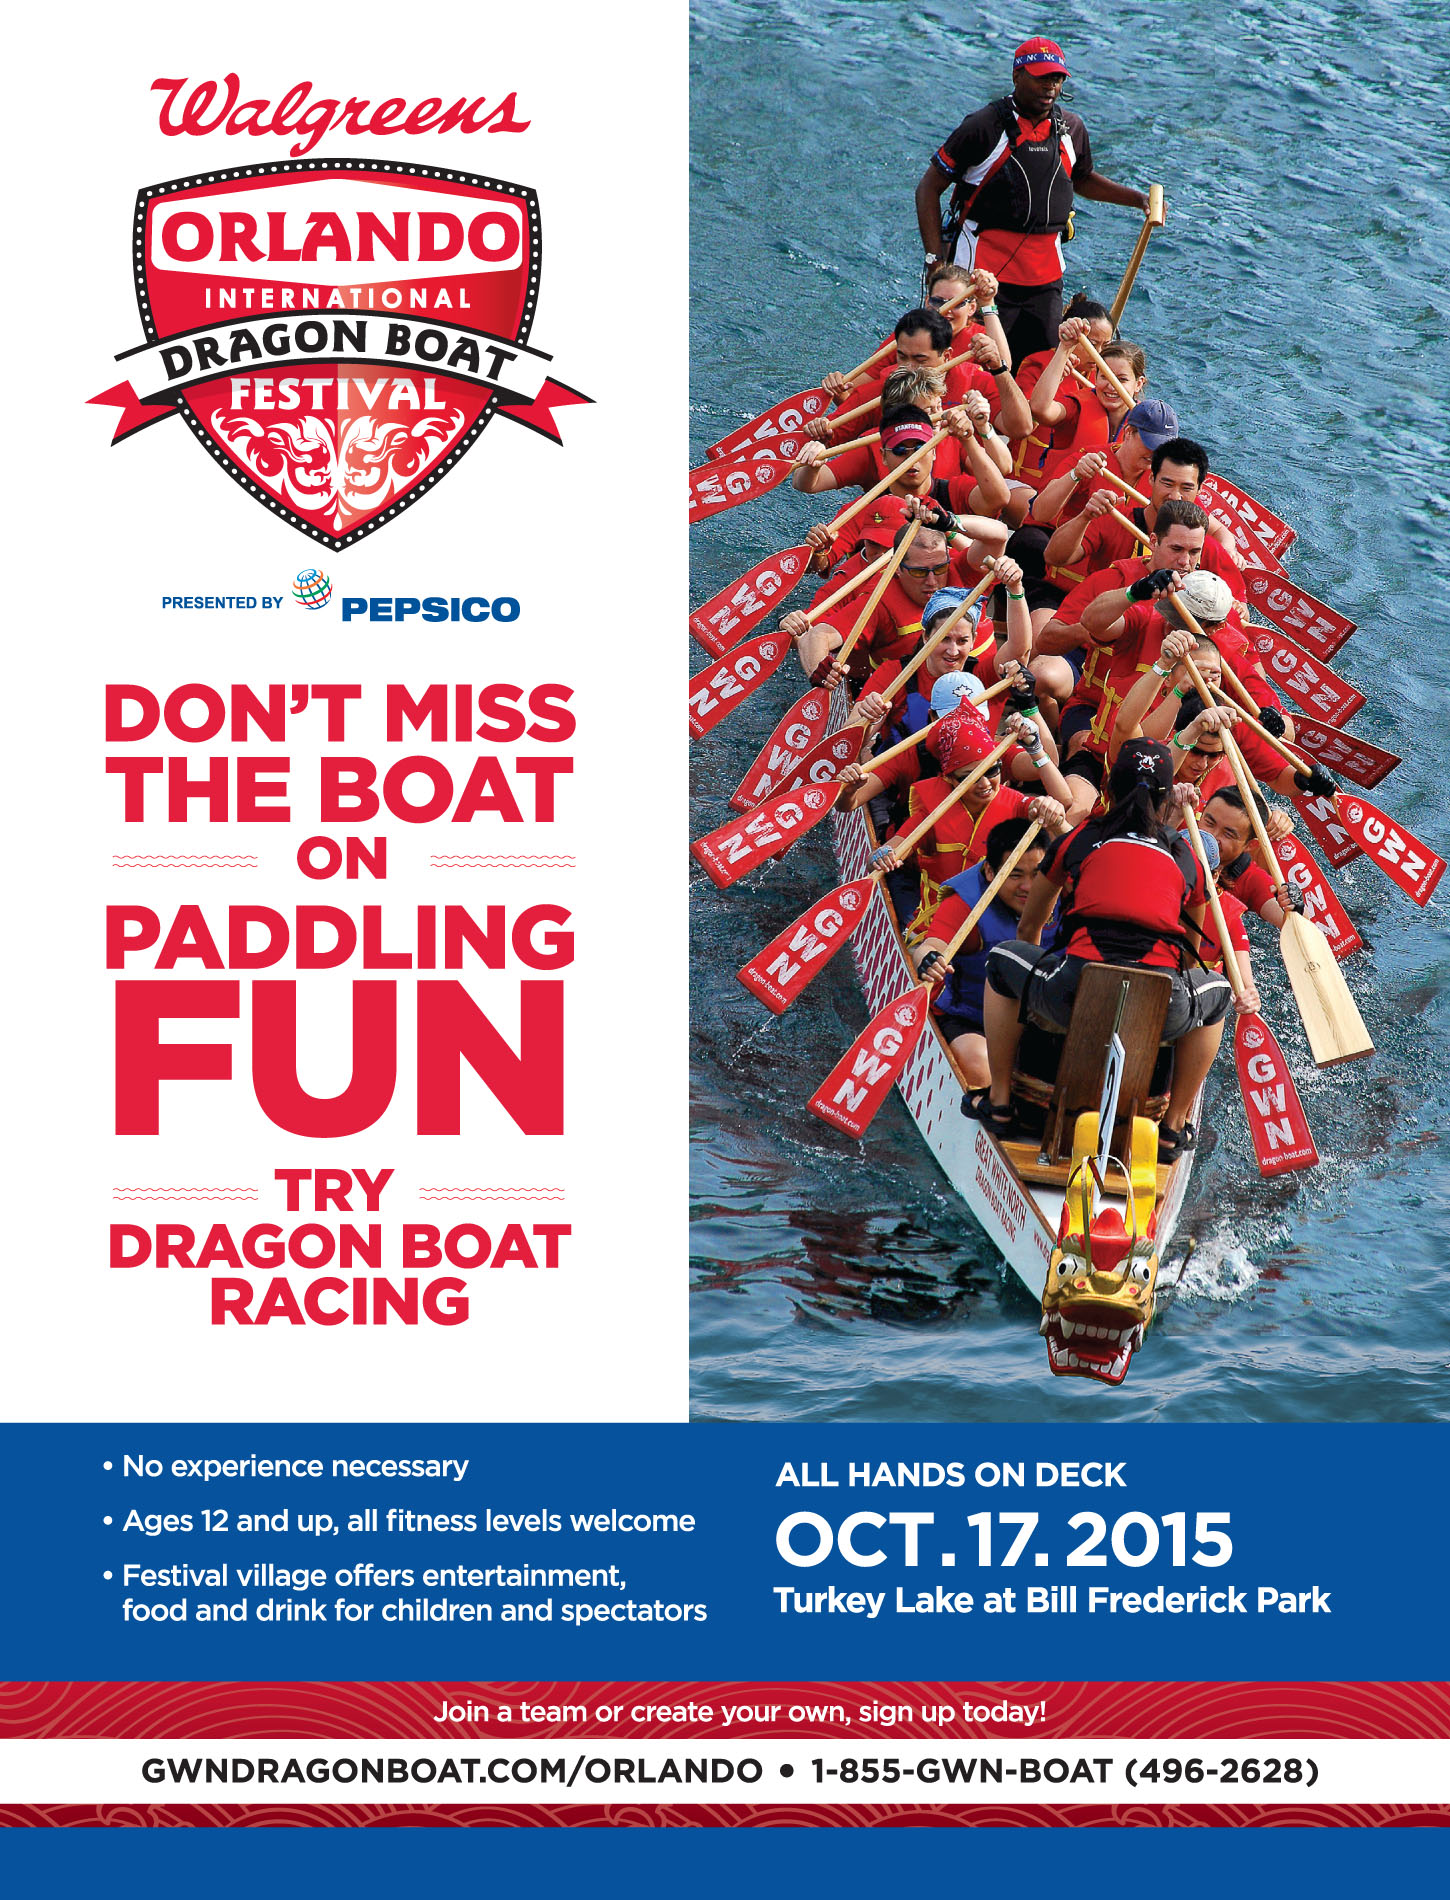 Walgreen Orlando International Dragon Boat Festival 2015